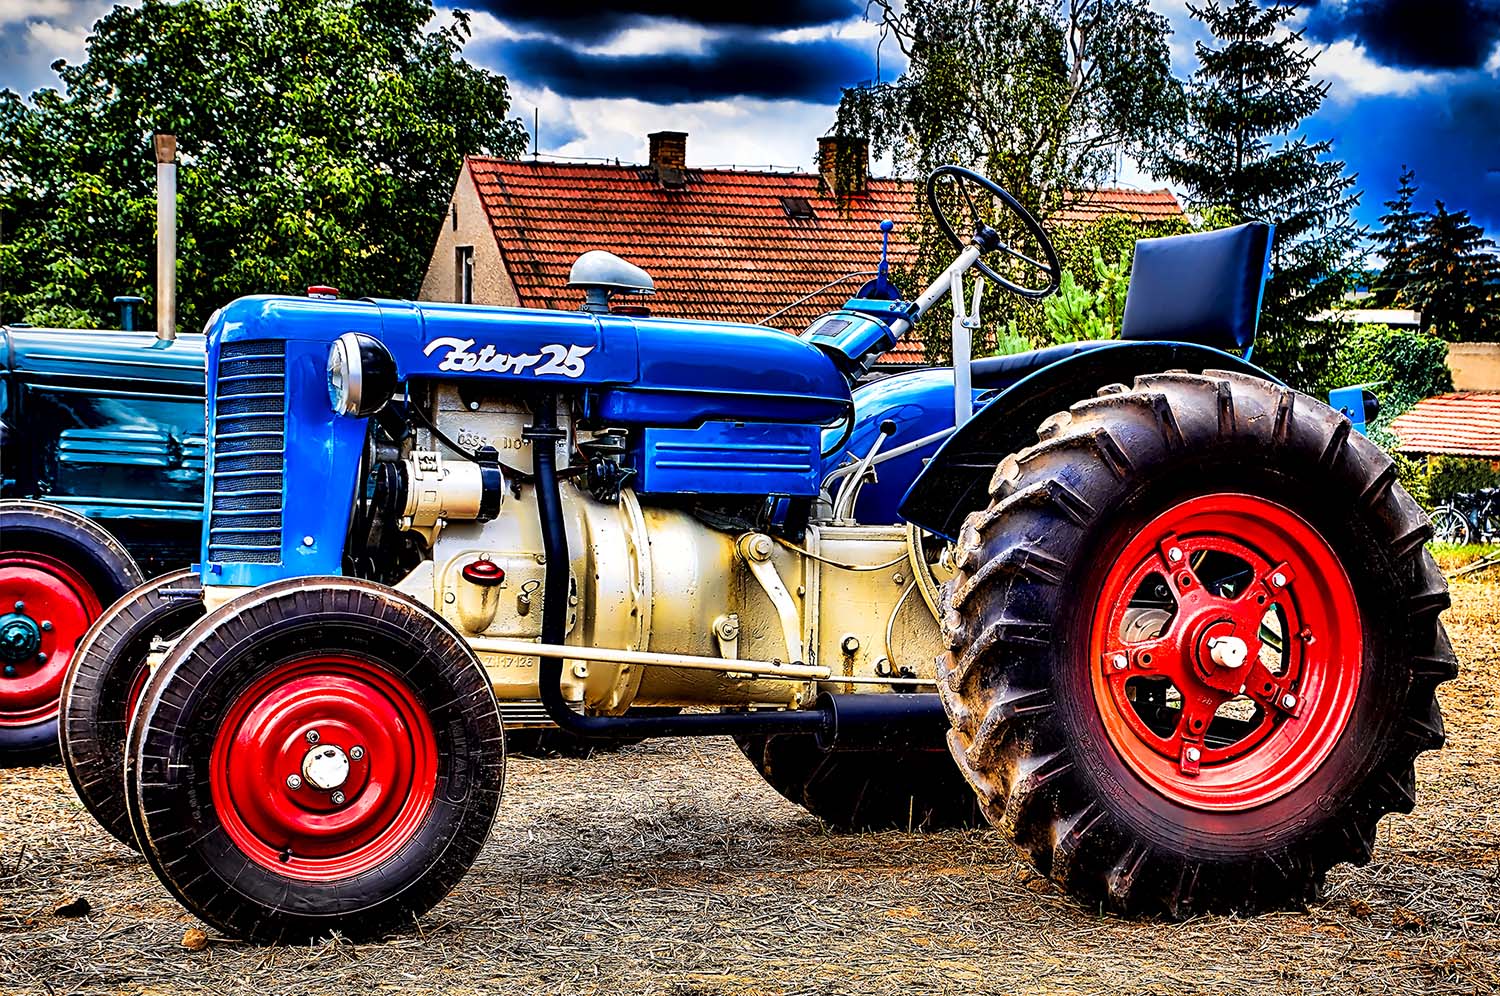 Fotka traktoru Zetror 25 od Jan Stojan Photography ©